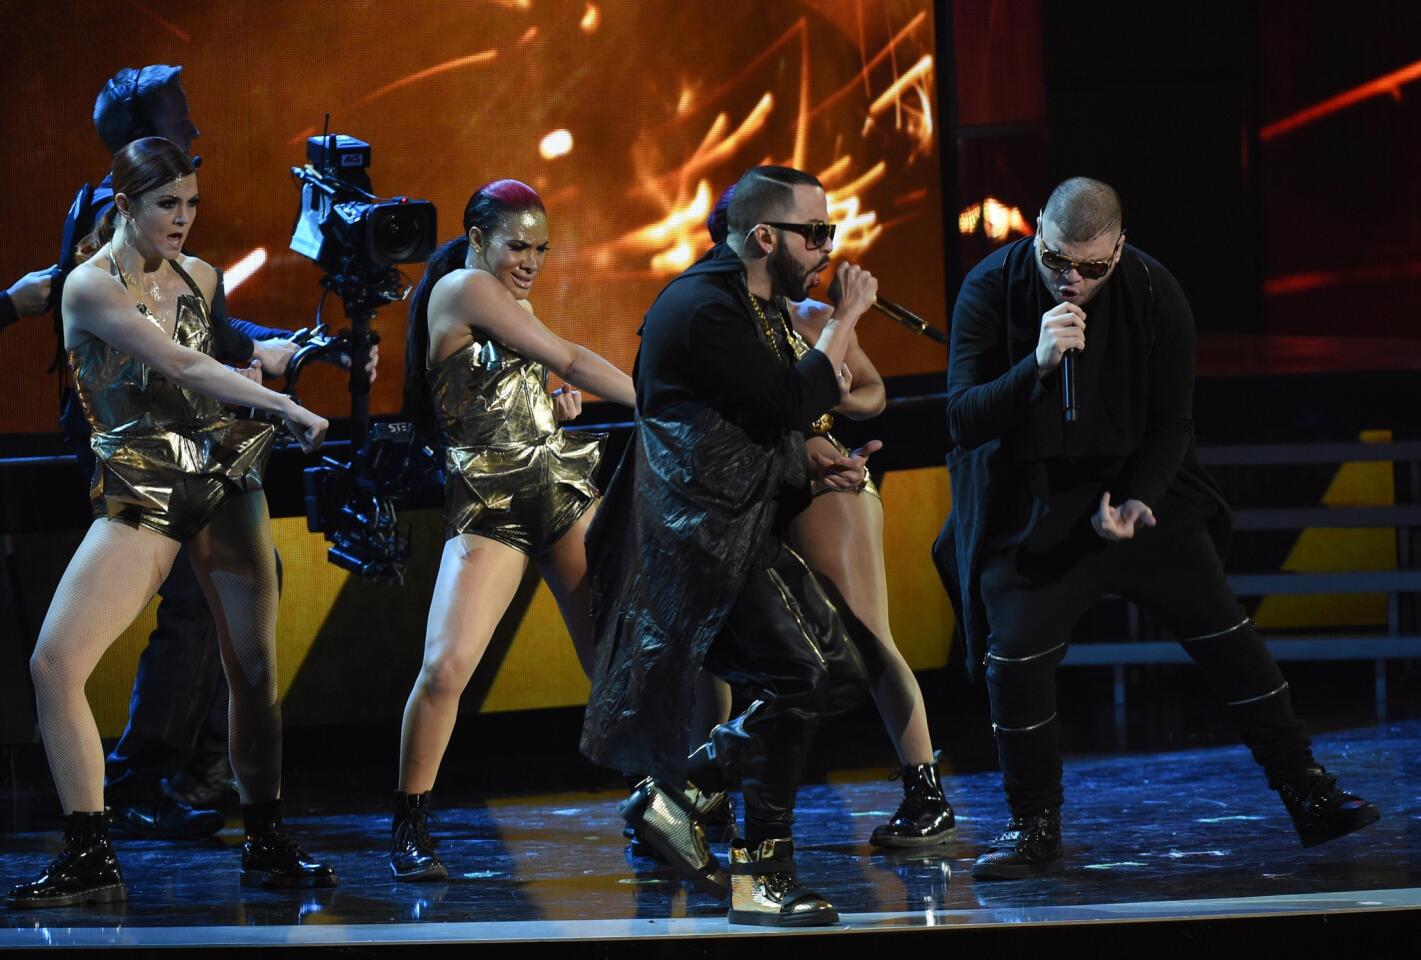 Latin Grammy Awards 2014 | Show highlights